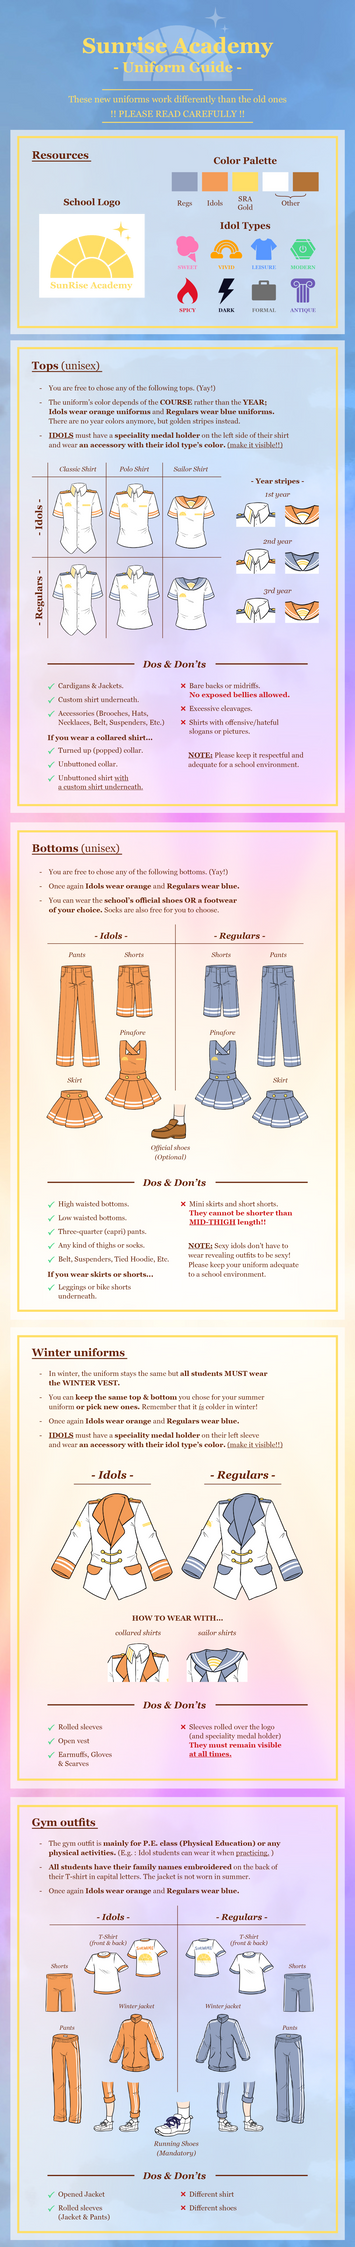 SRA: Uniform guides